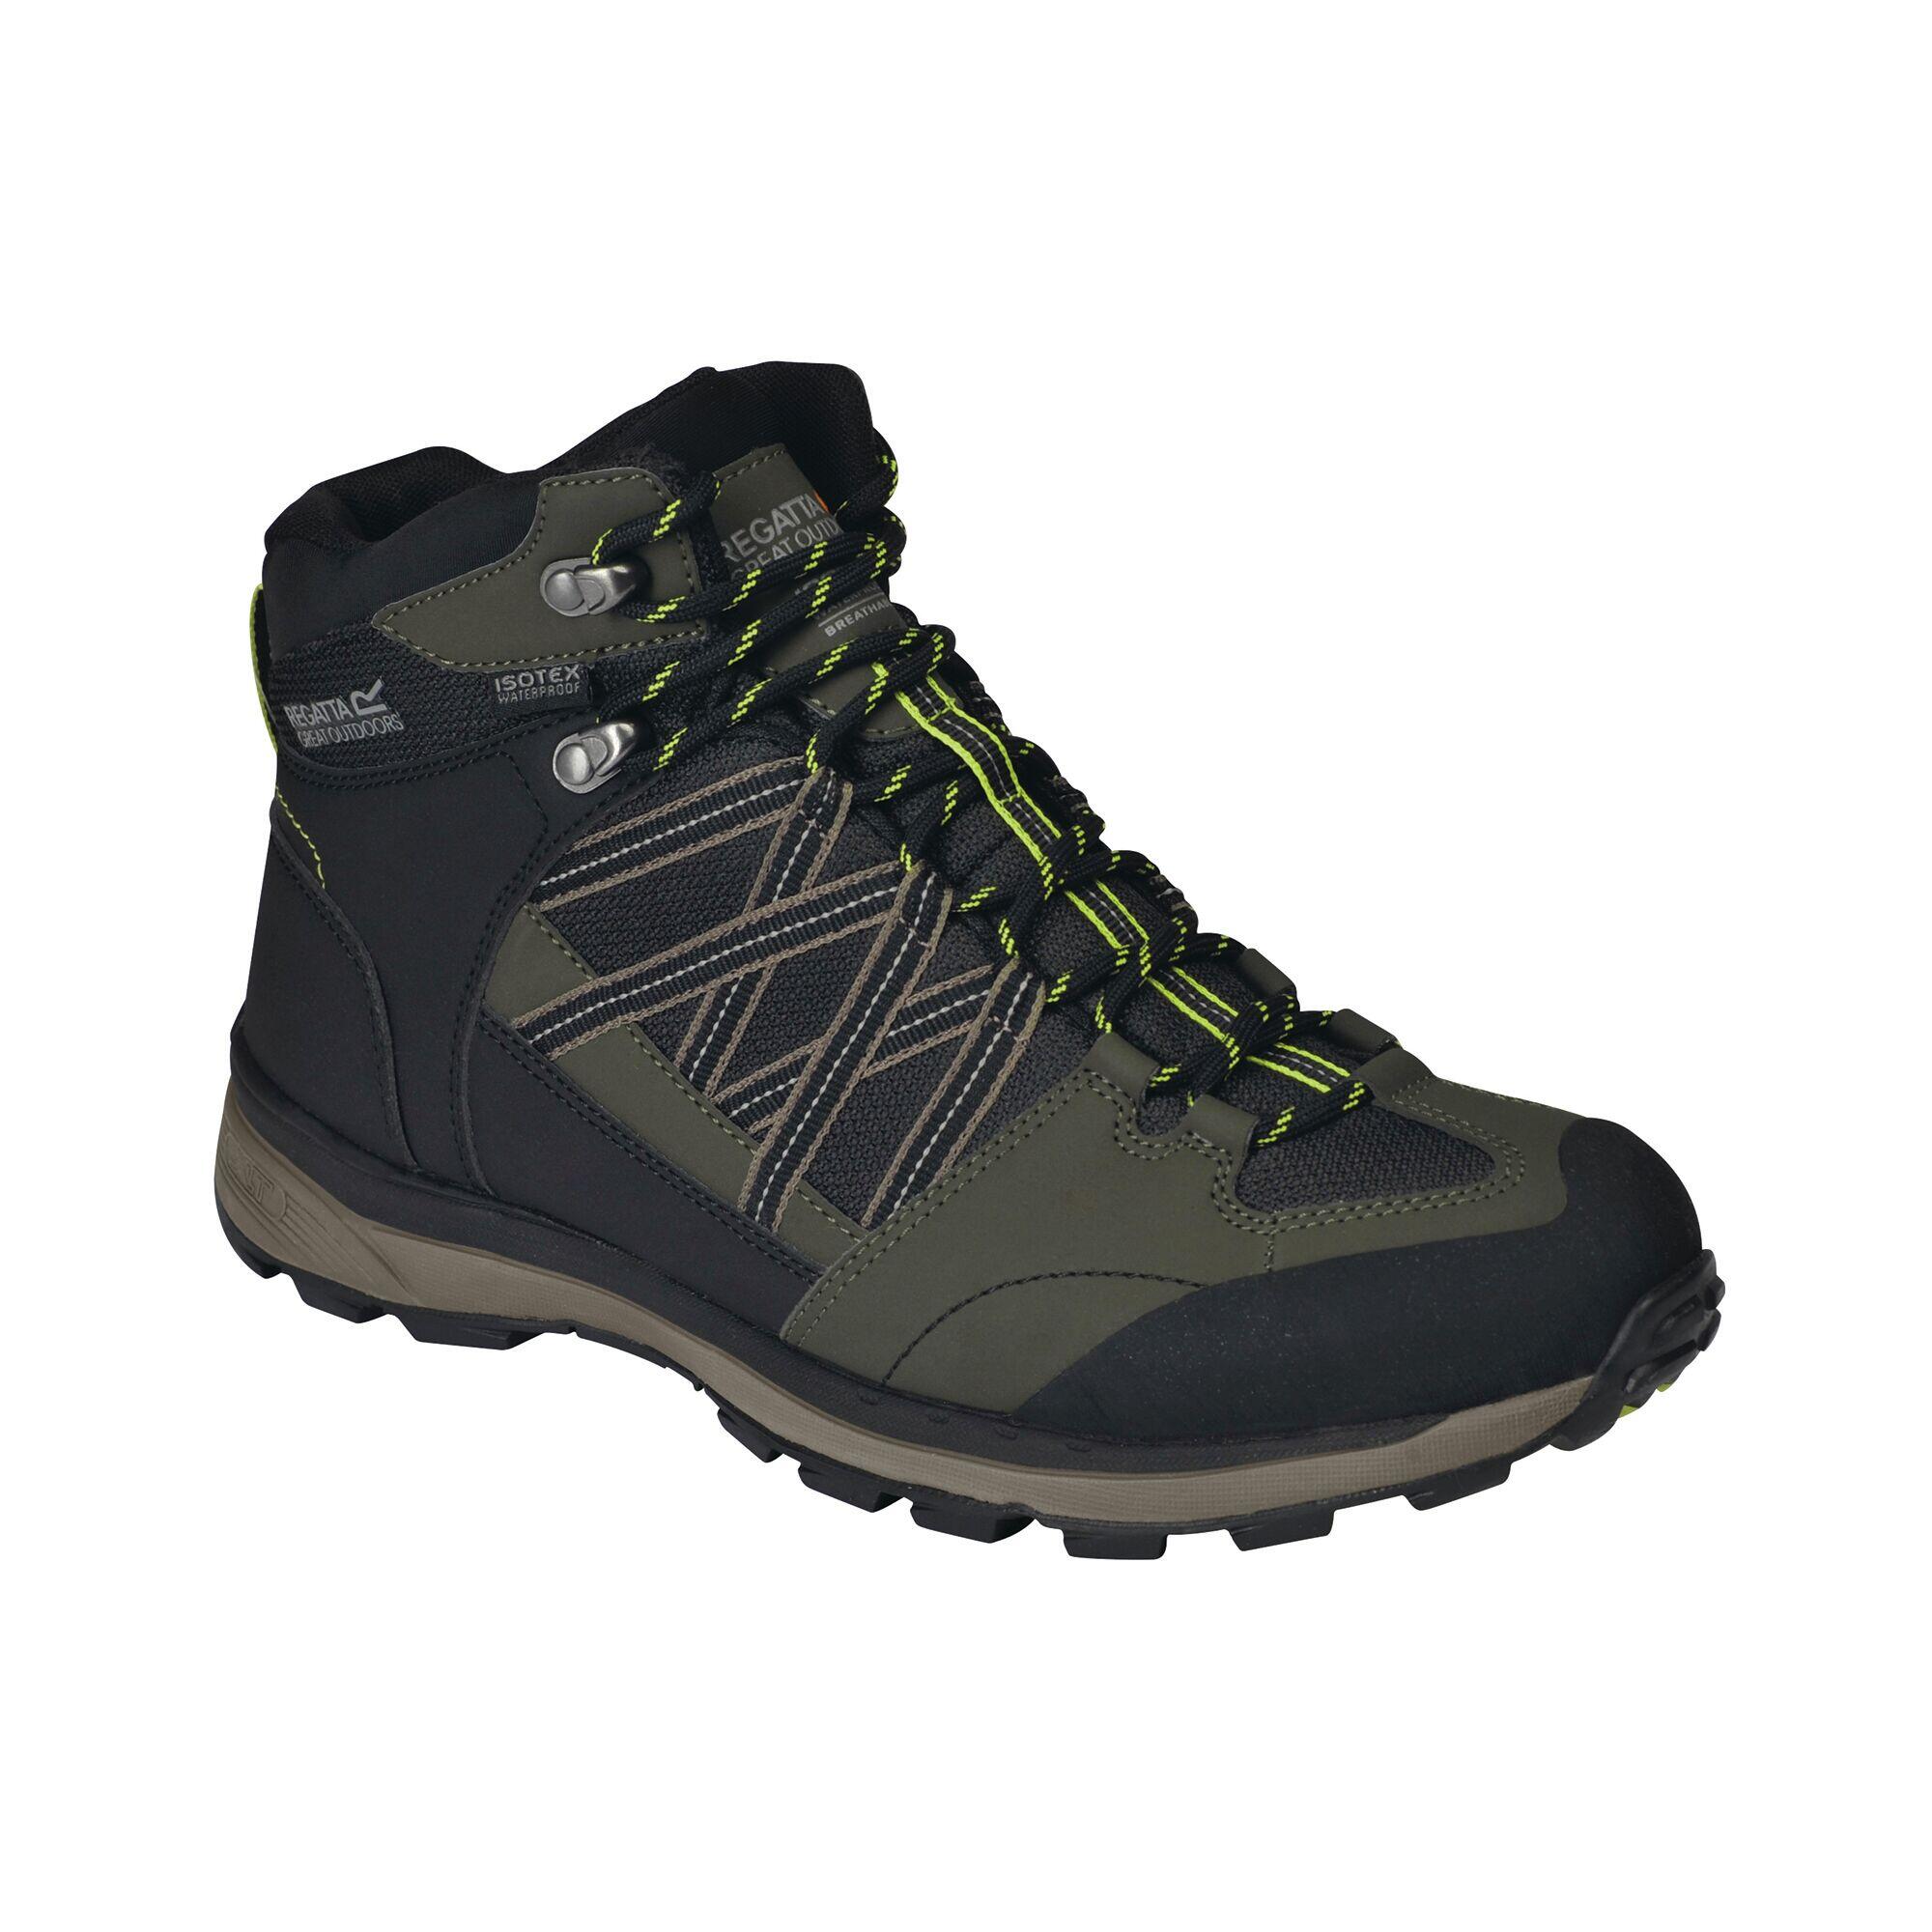 REGATTA Samaris II Men's Hiking Boots - Dark Khaki/Light Green